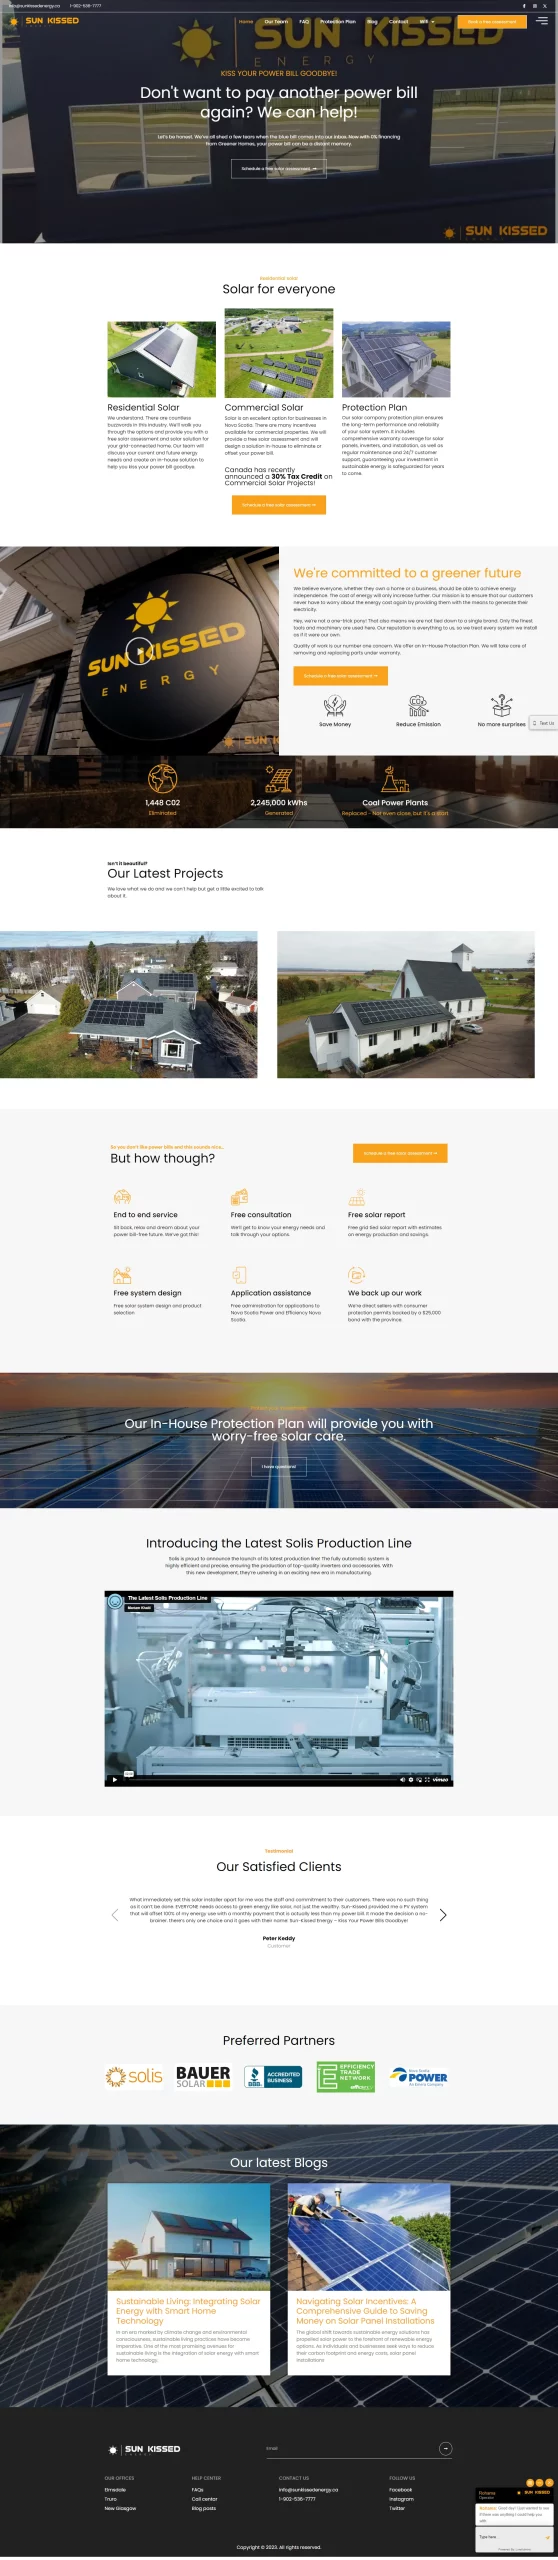 Buy-Solar-Panels-in-Halifax-Sun-kissed-Energy-Trusted-Solar-Provider